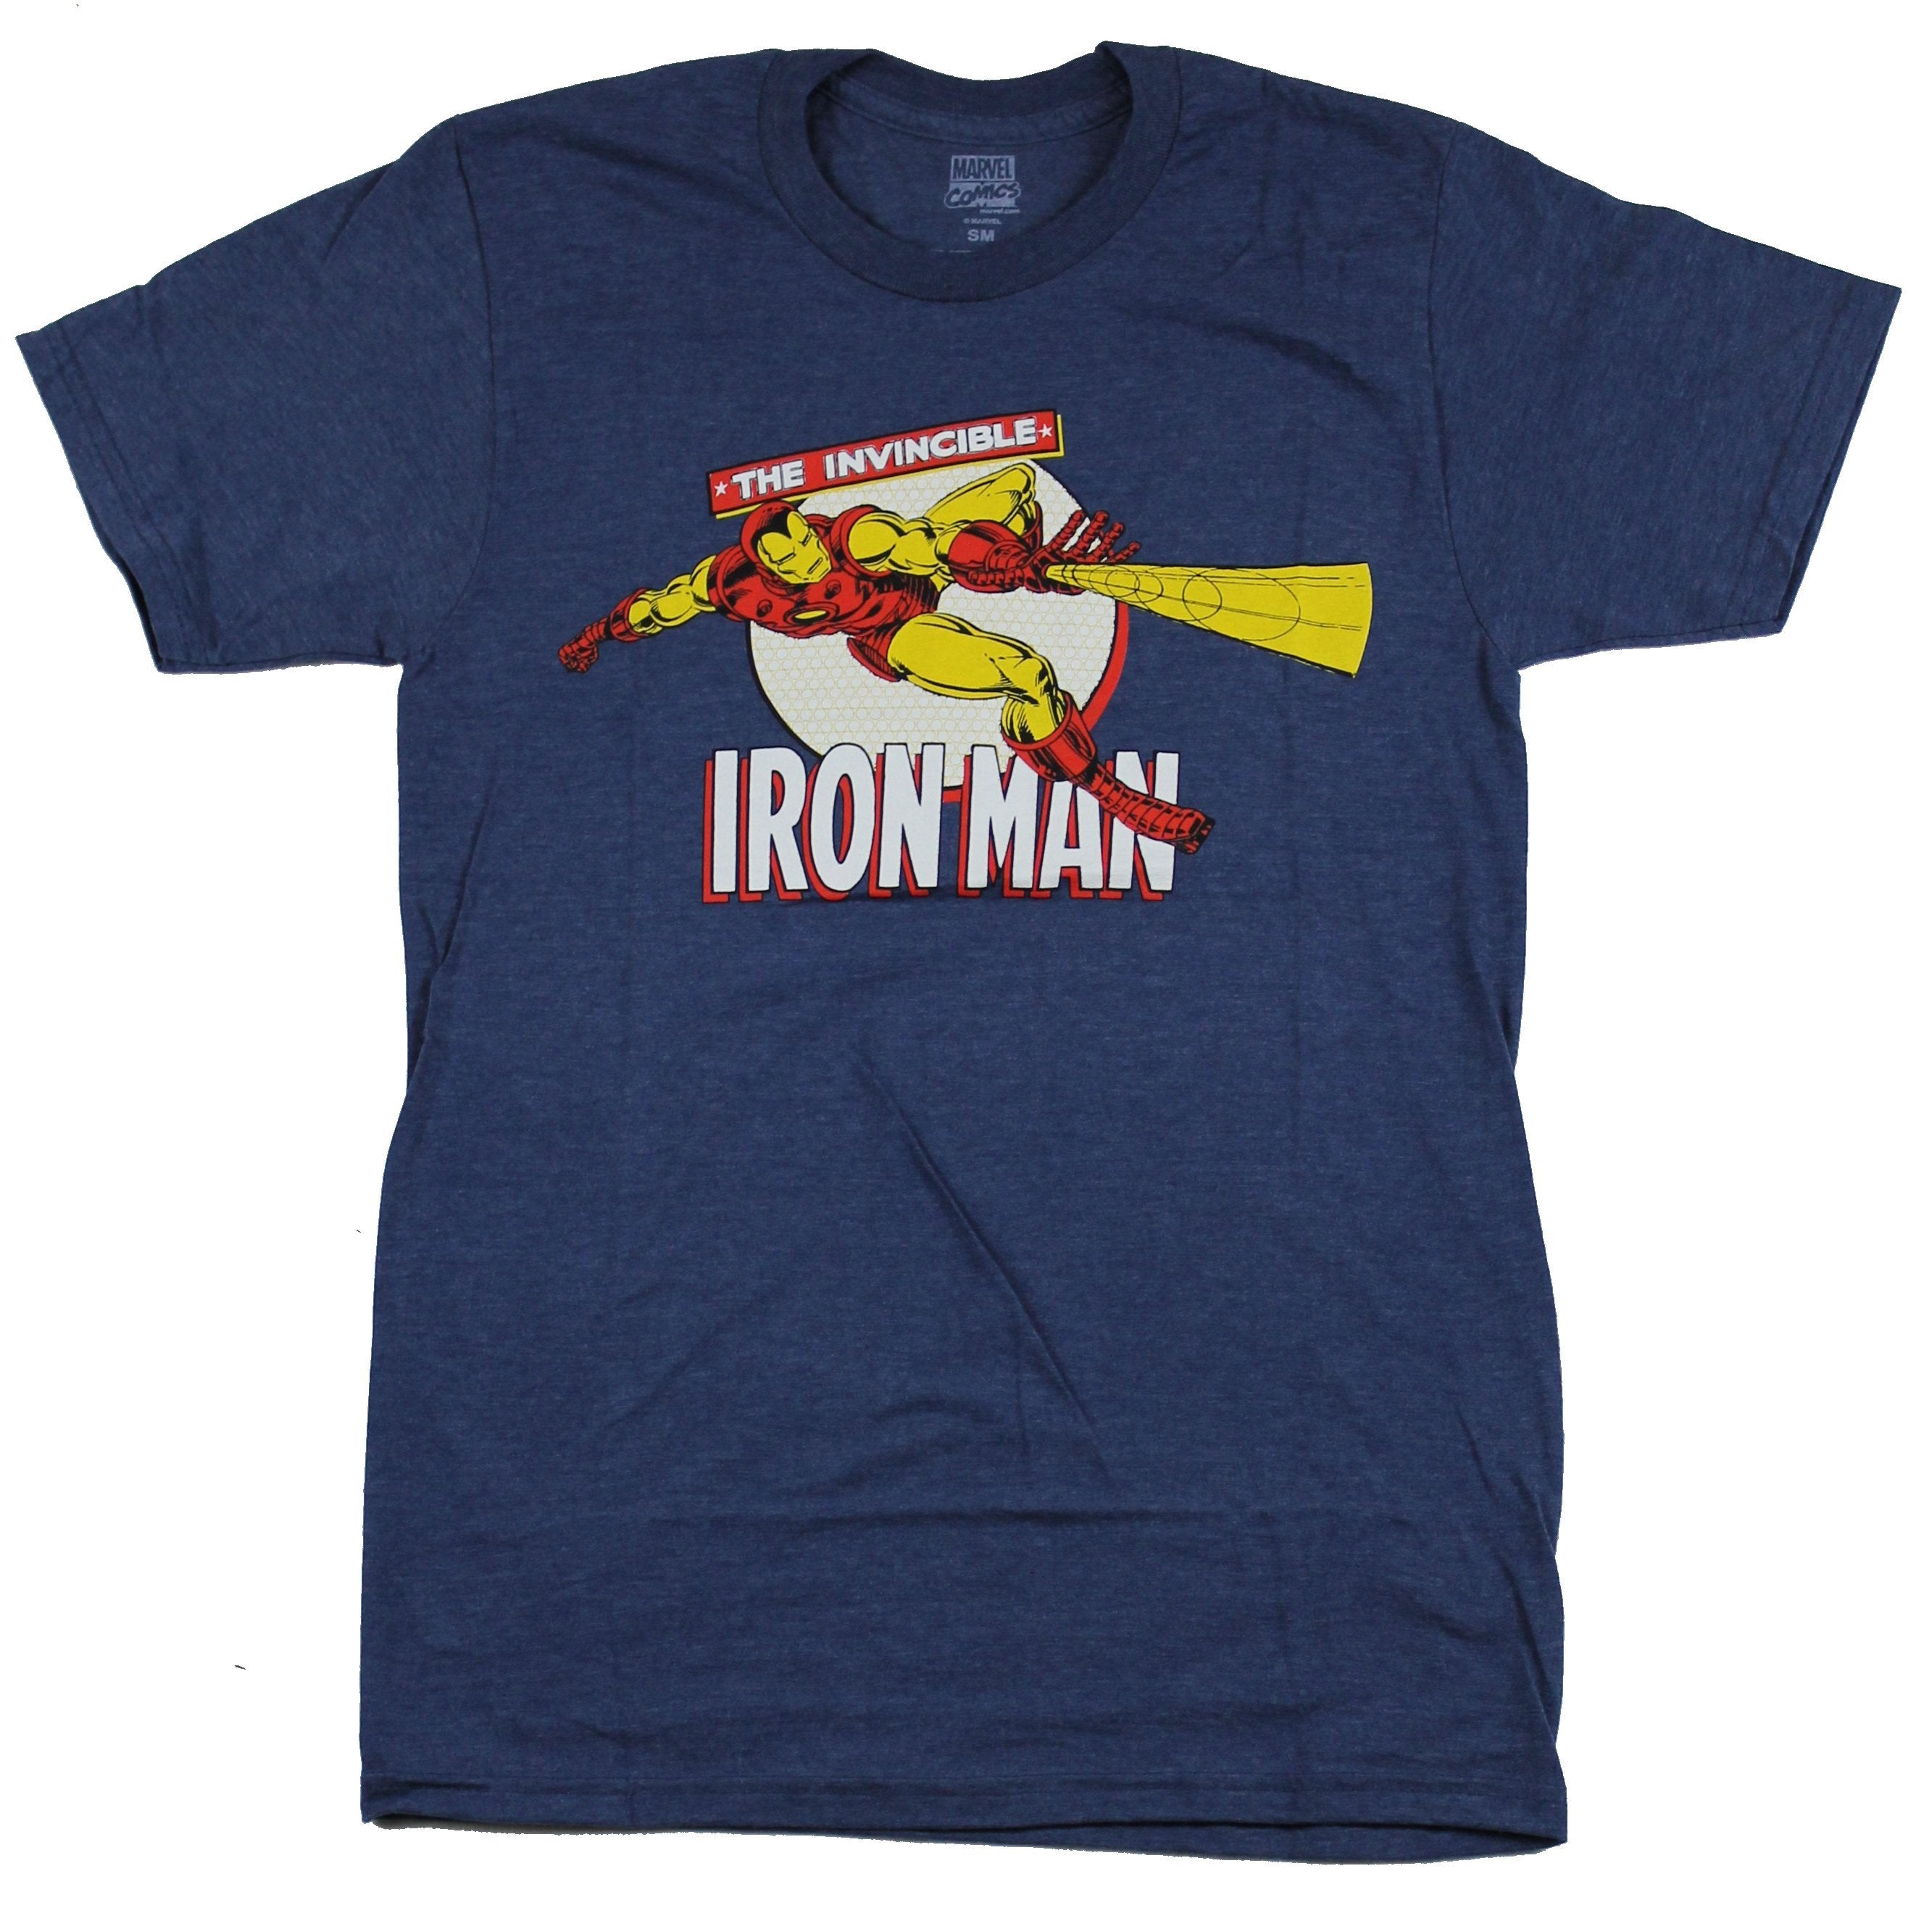 Iron Man (Marvel Comics) Mens T-Shirt - Invincible Old School Shooting Circle